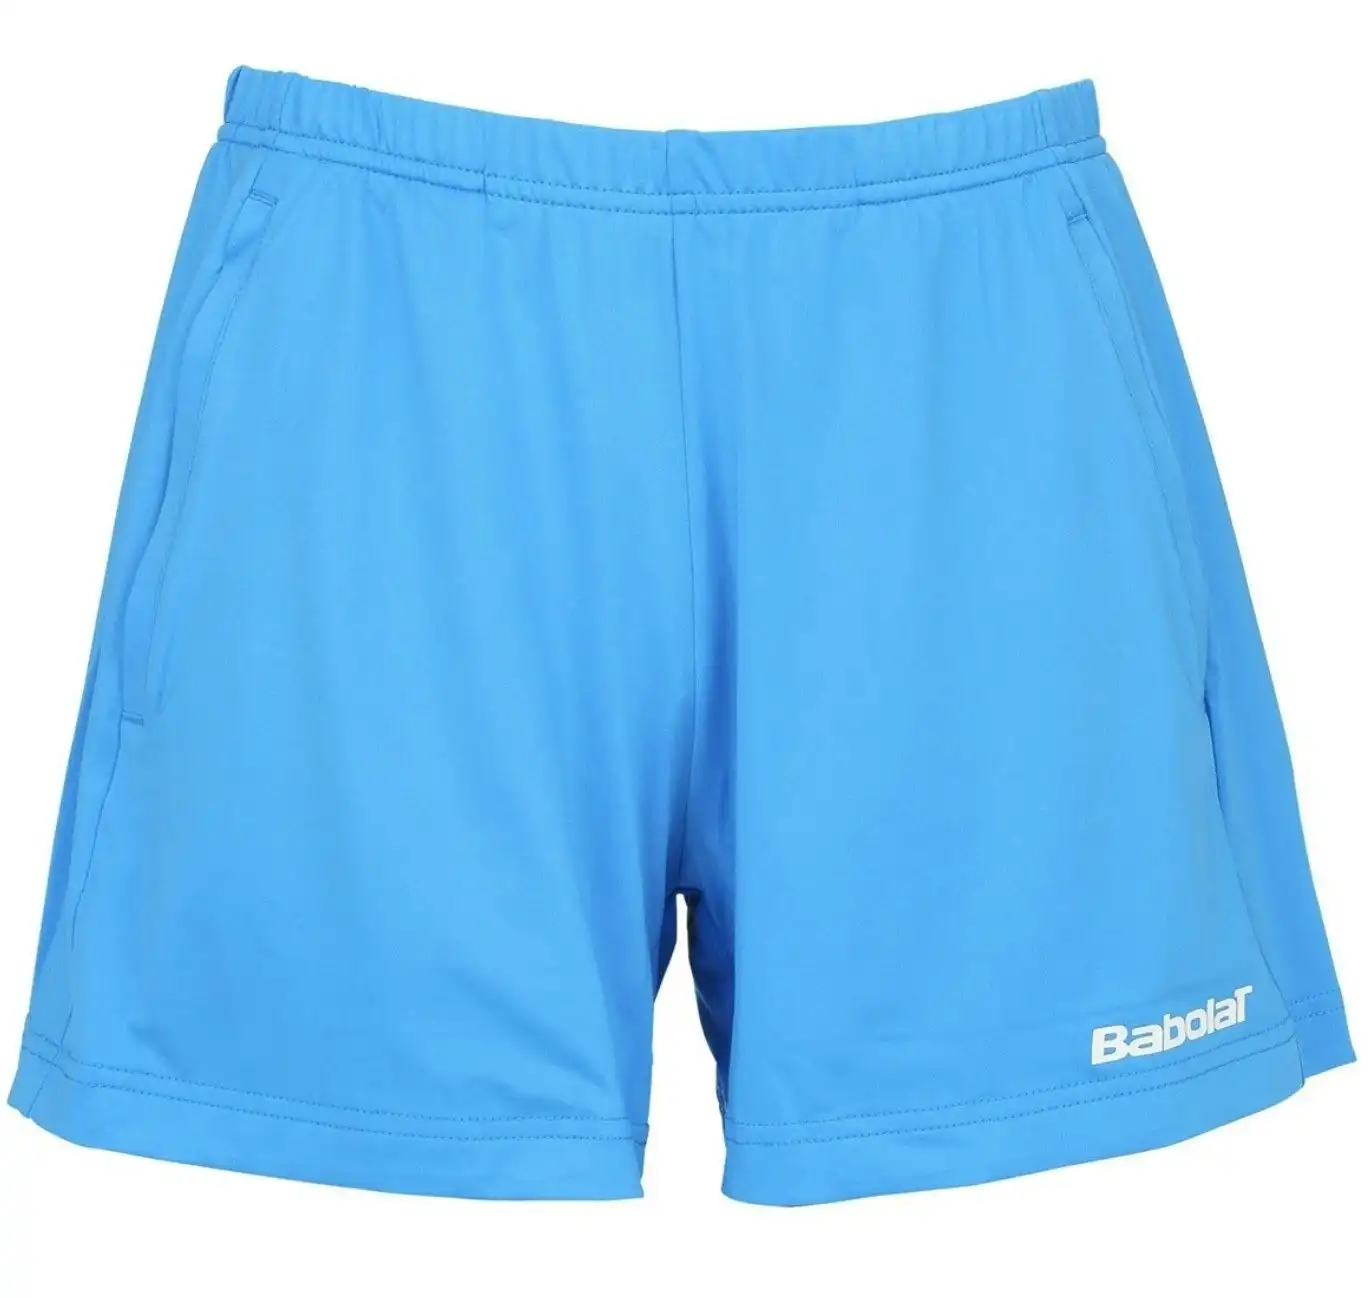 Babolat Womens Tennis Match Shorts Gym Sports - Turquoise